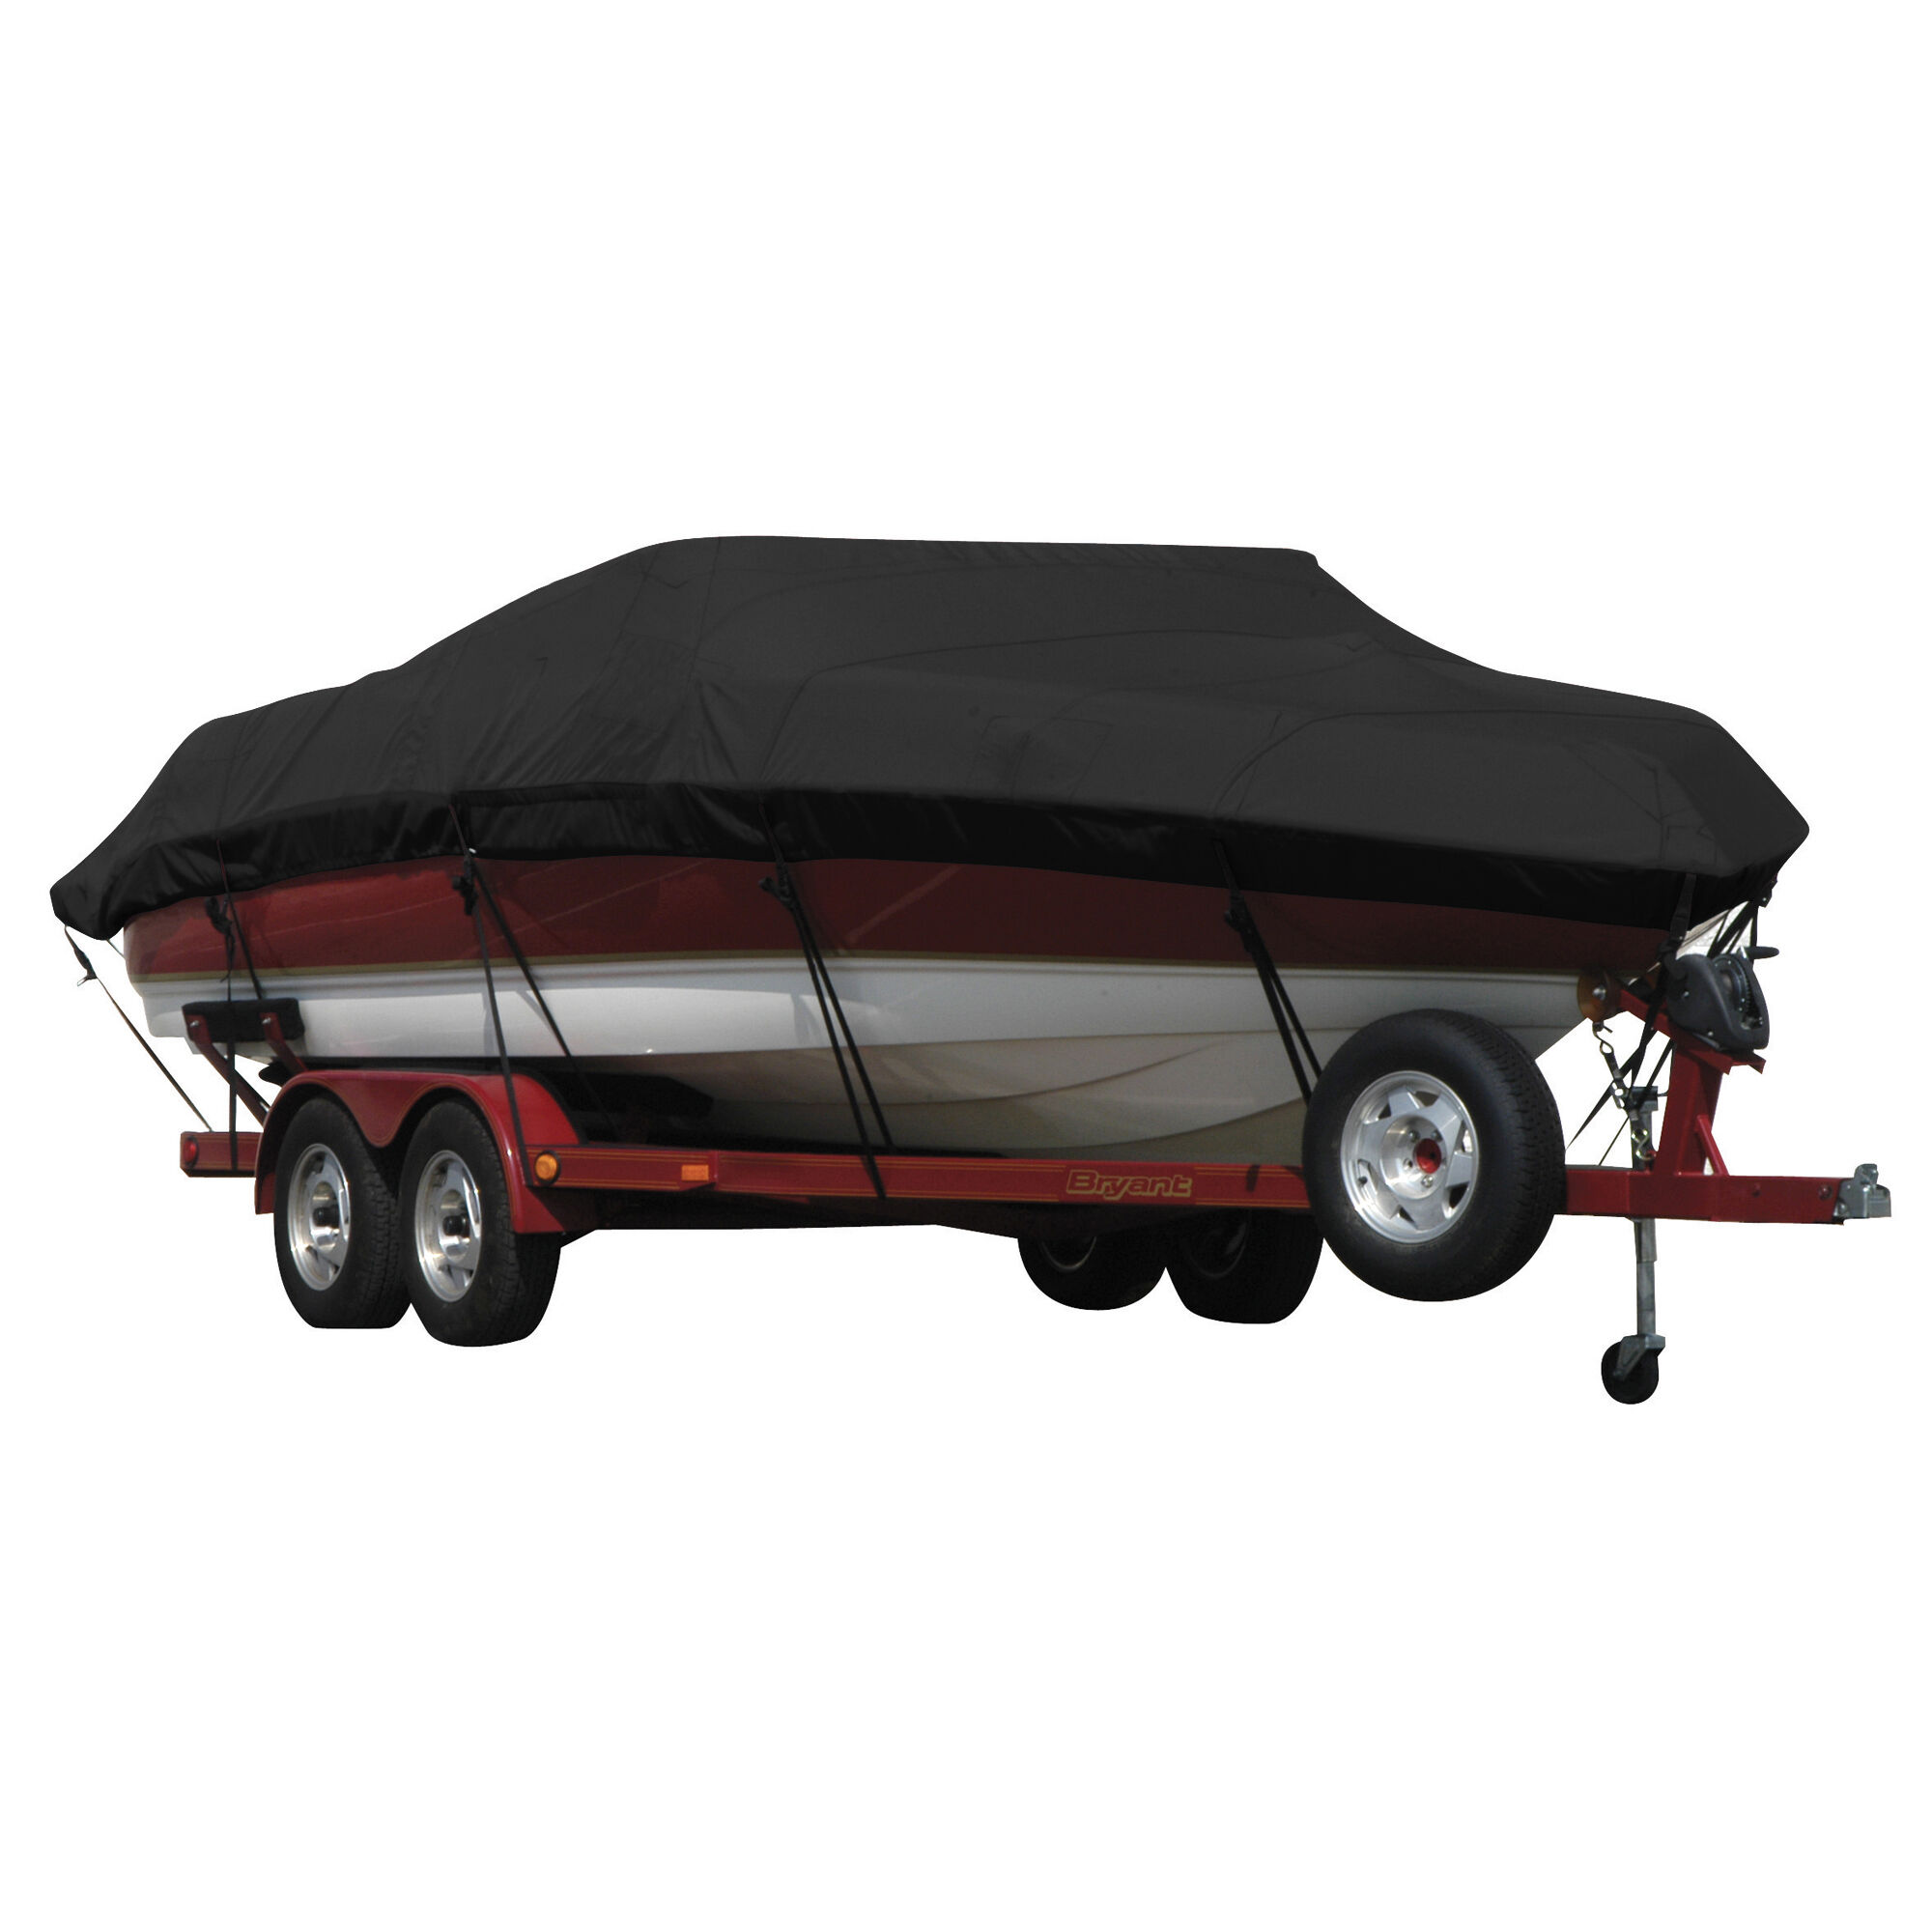 Covermate Exact Fit Sunbrella Boat Cover for Campion Chase 910 Zri Chase 910 Zri Cc I/O. Black